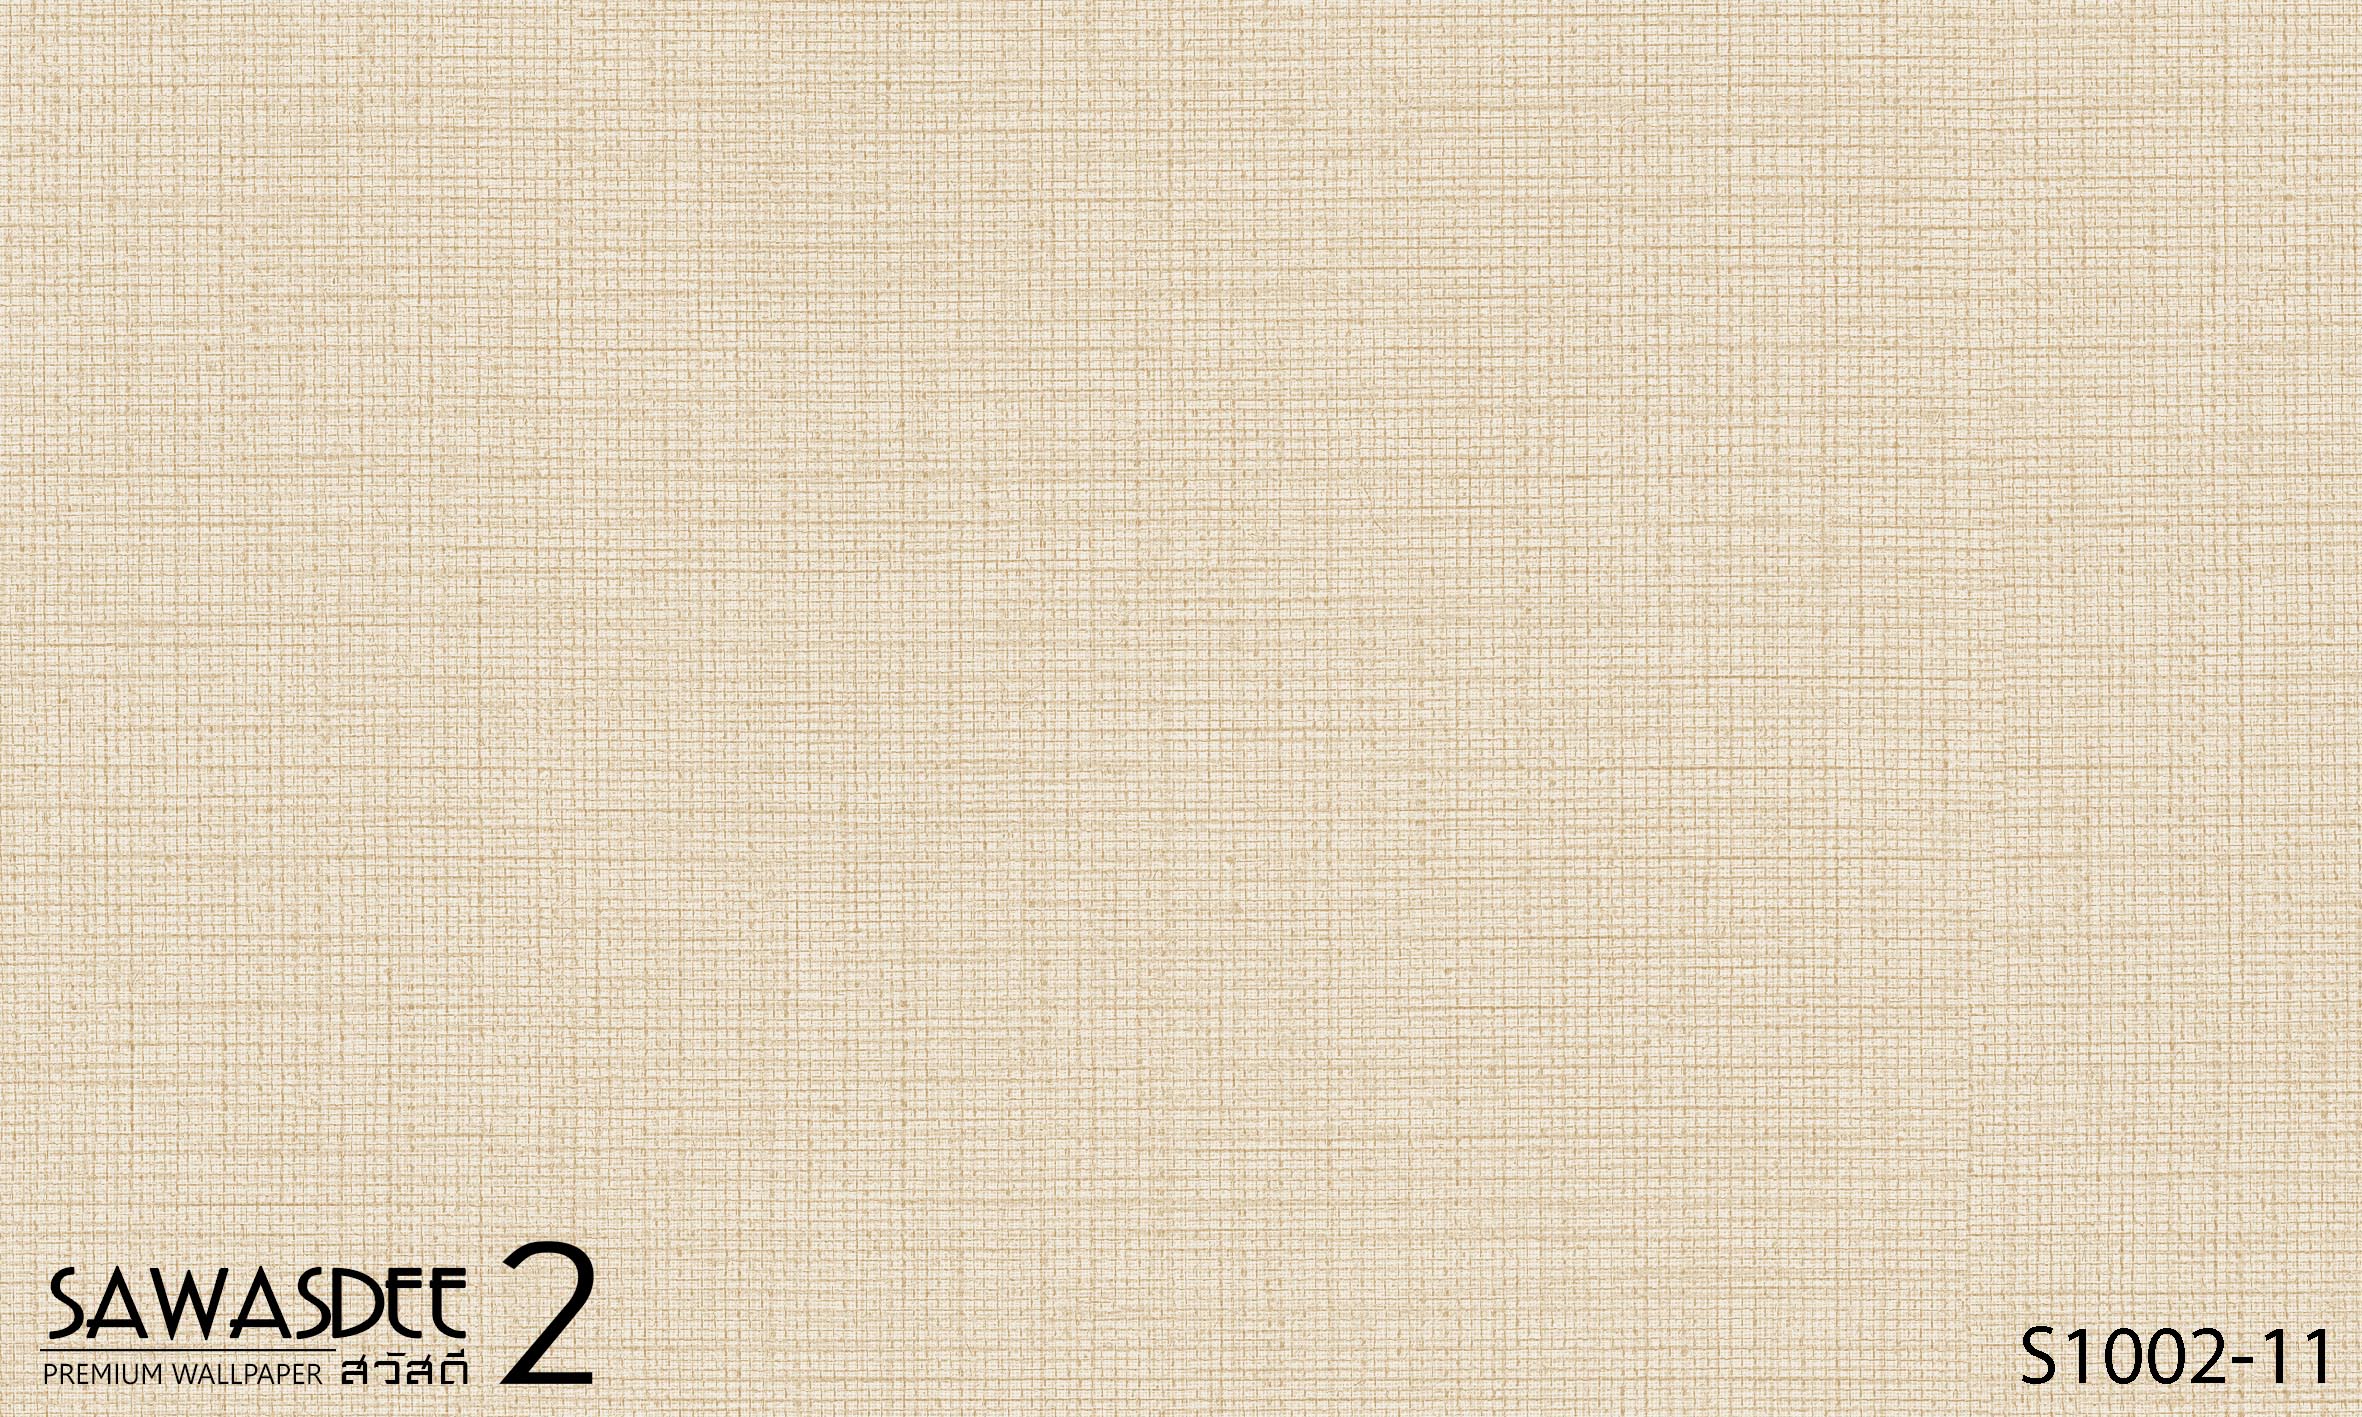 Wallpaper (SAWASDEE 2) S1002-11